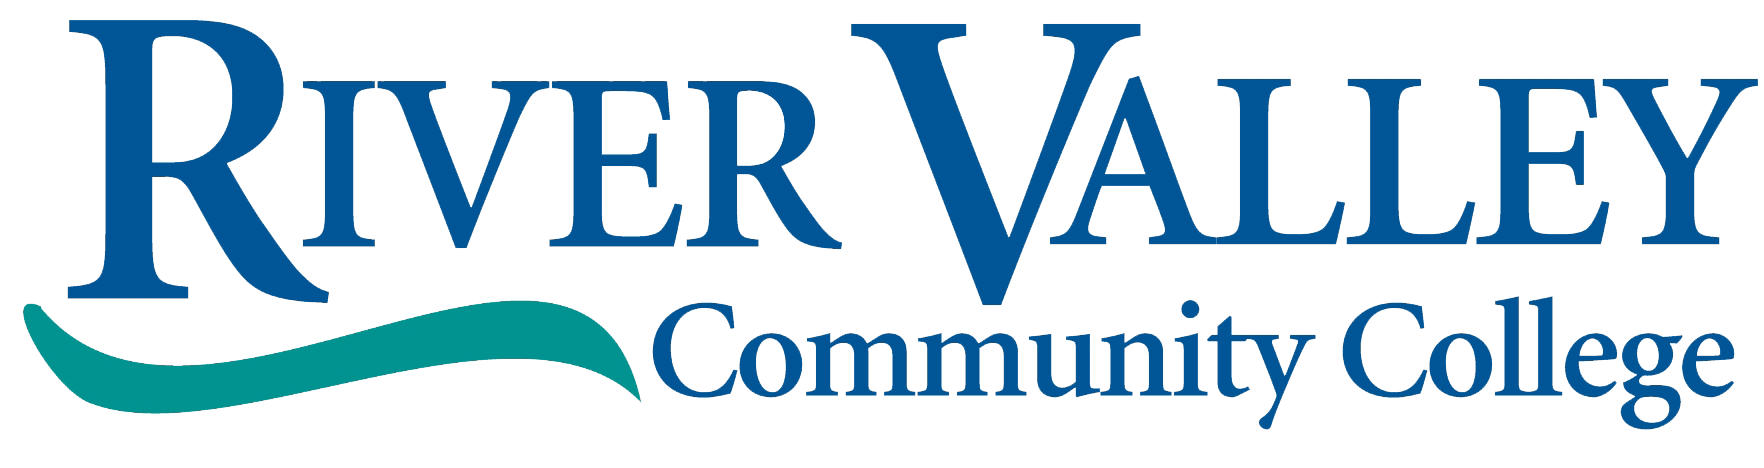 RVCC logo.png